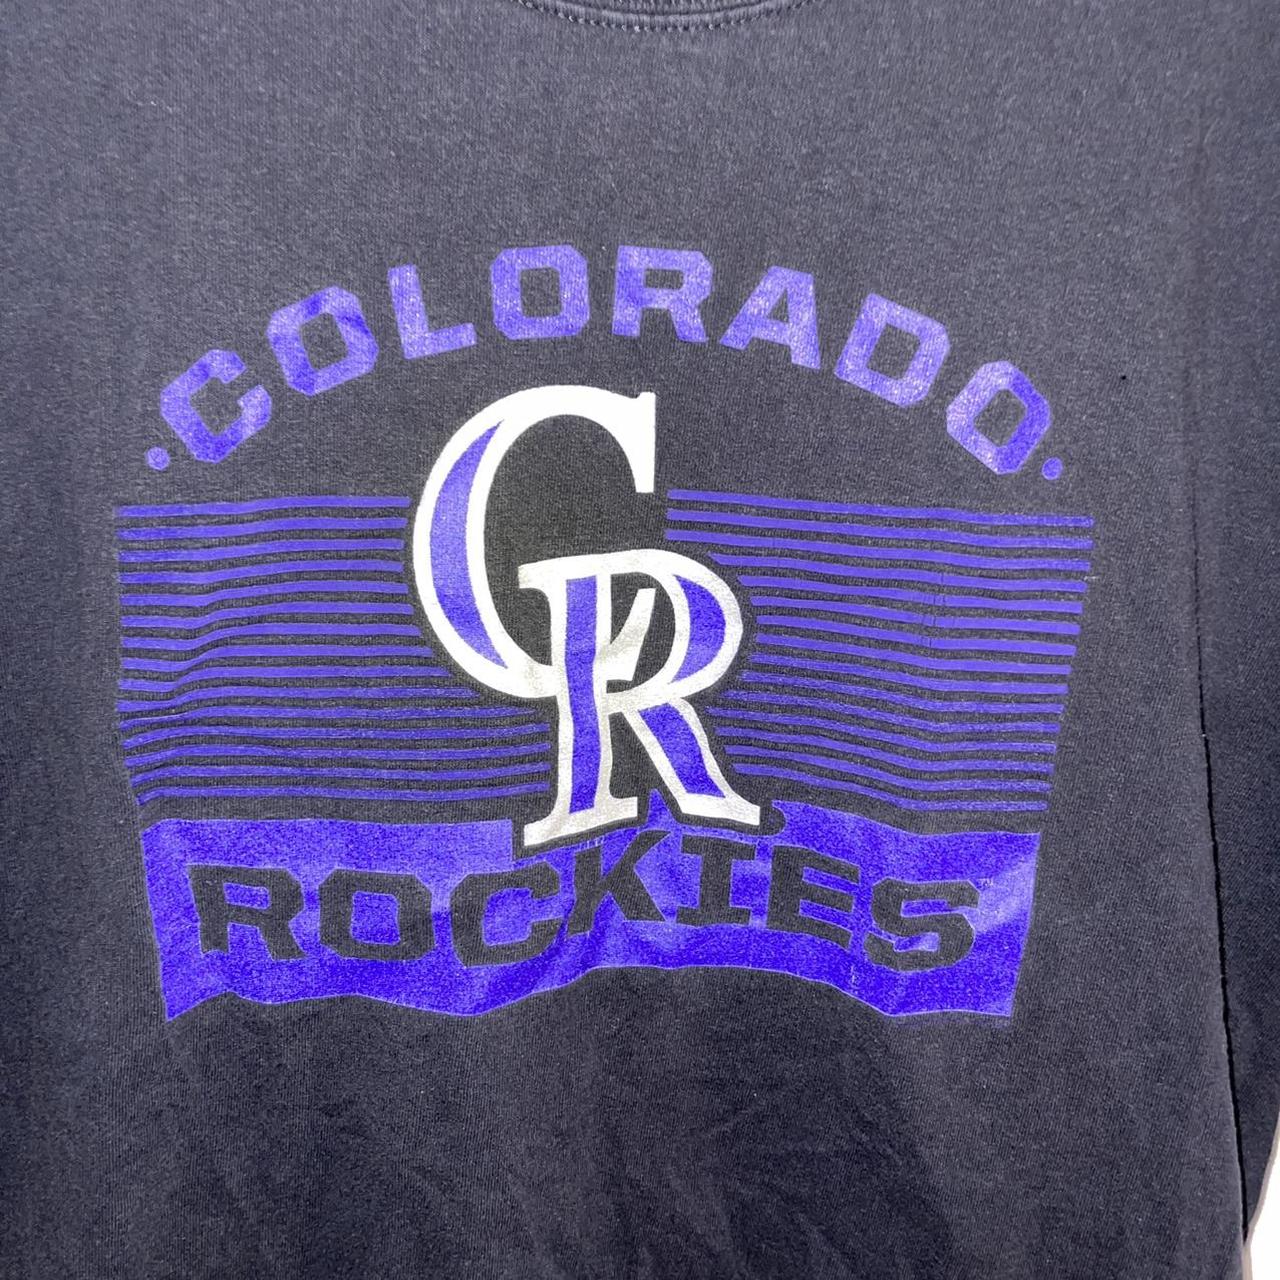 Vintage Colorado Rockies Shirt Mens XXL Blue White - Depop